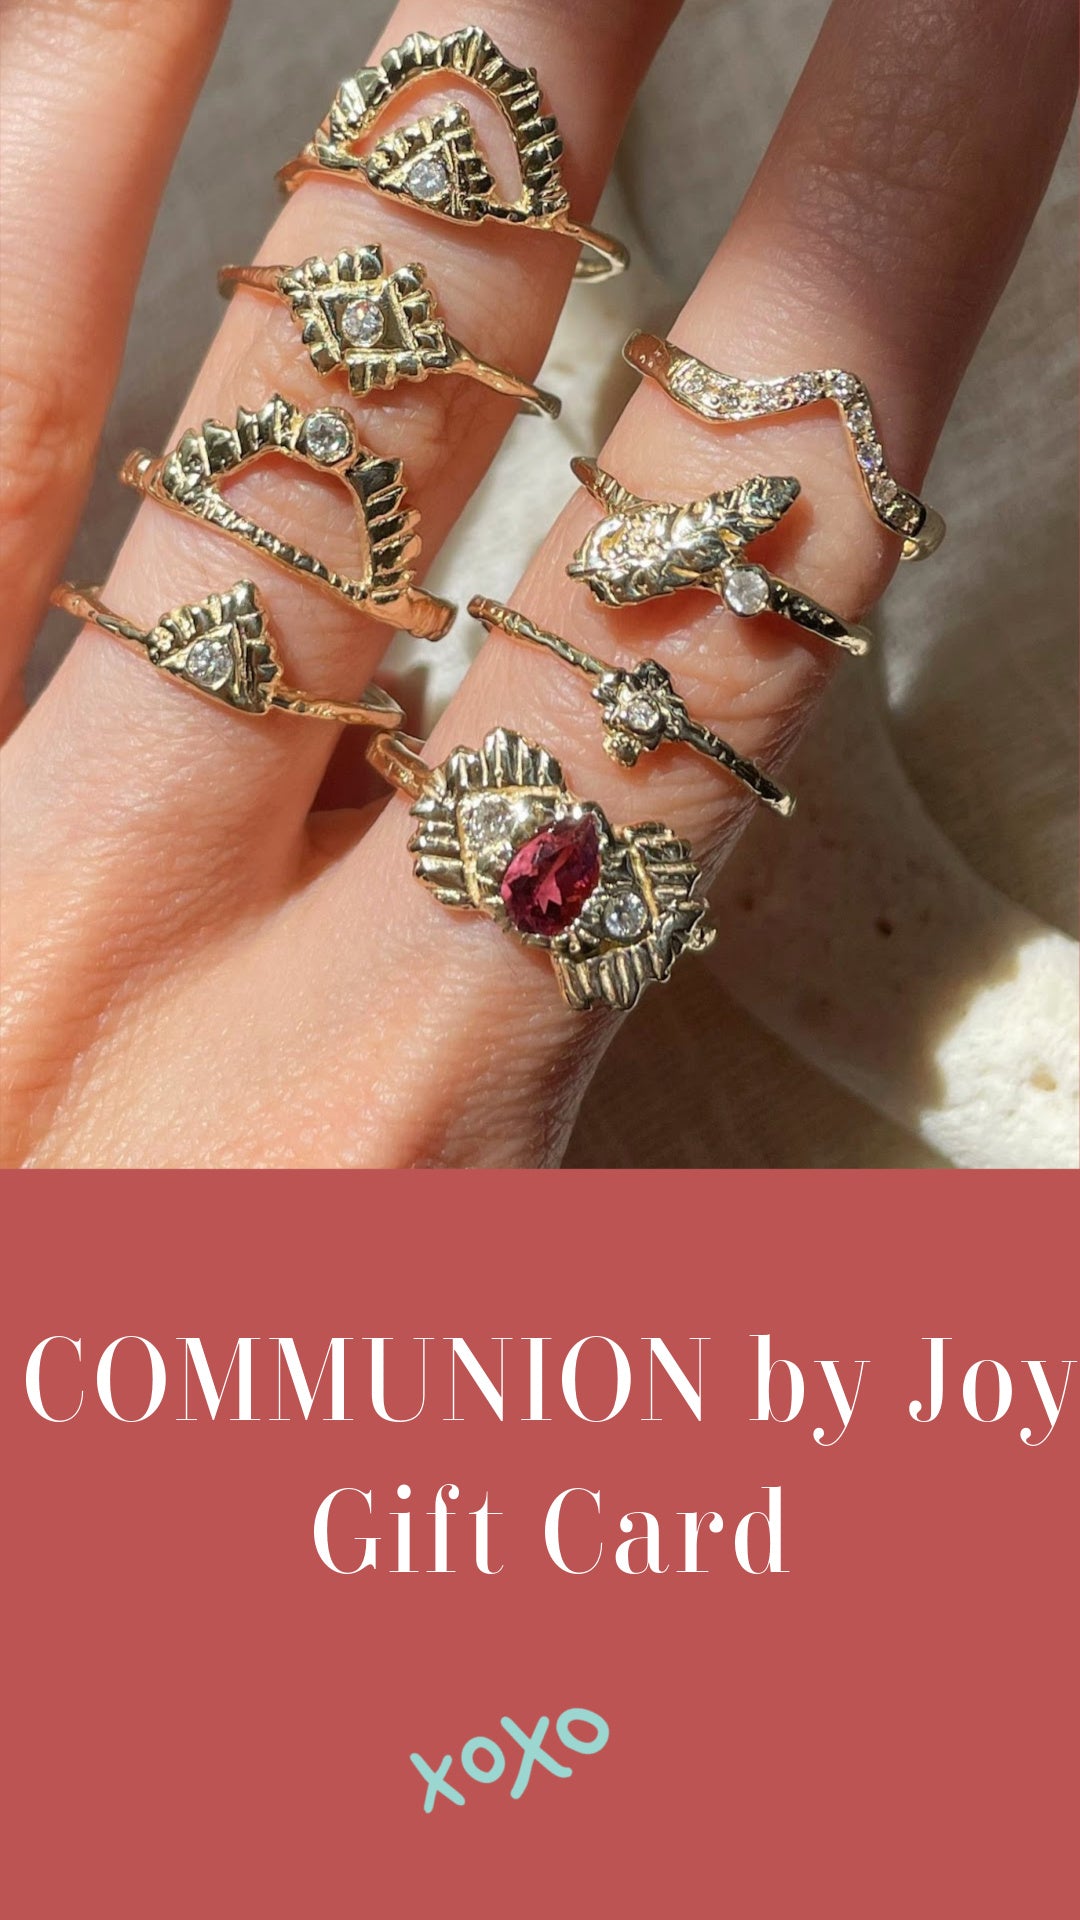 COMMUNION by Joy * GIFT CARD